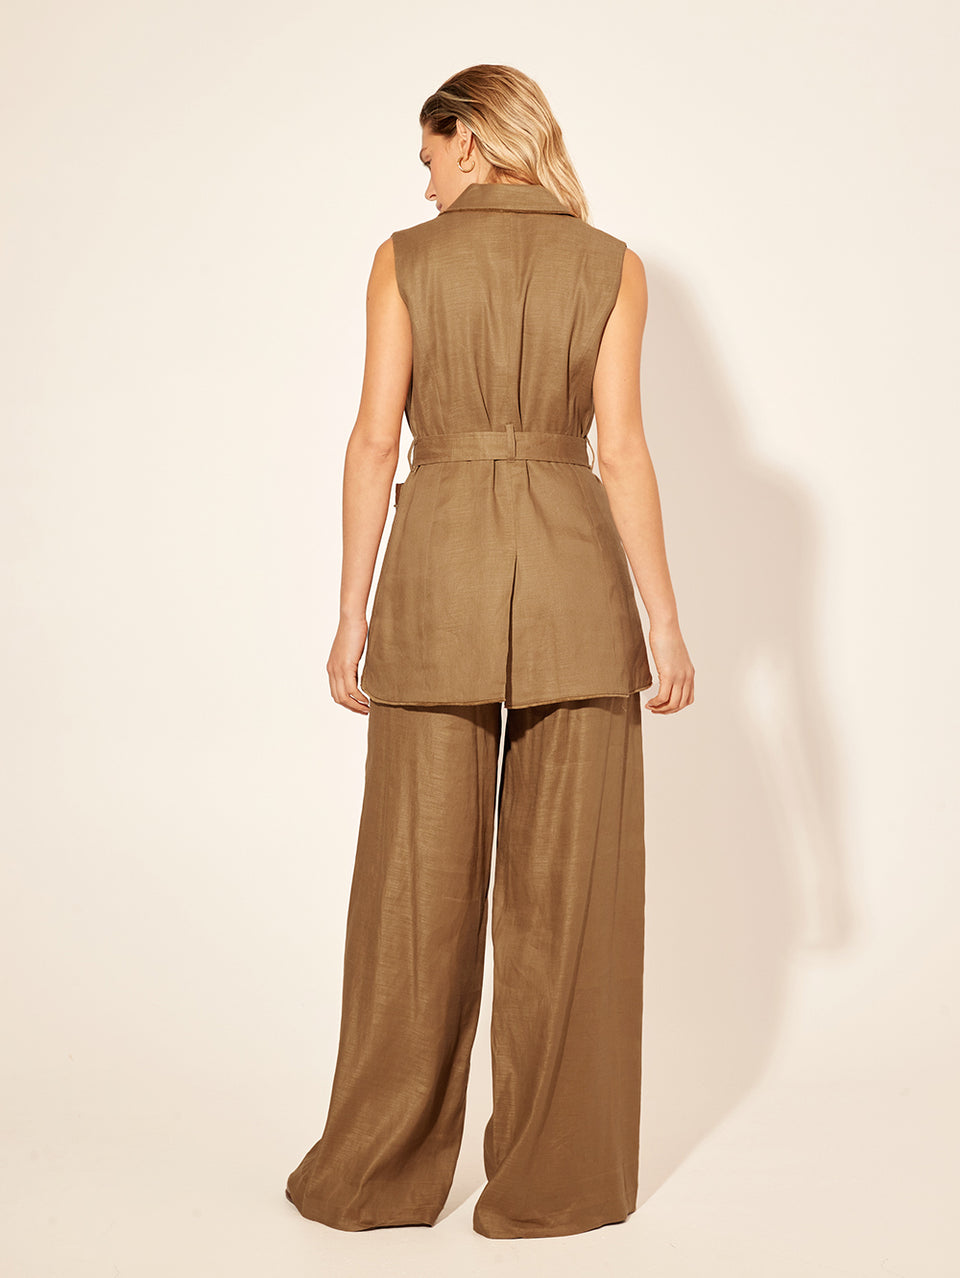 Penelope Vest KIVARI | Model wears brown tailored vest back view